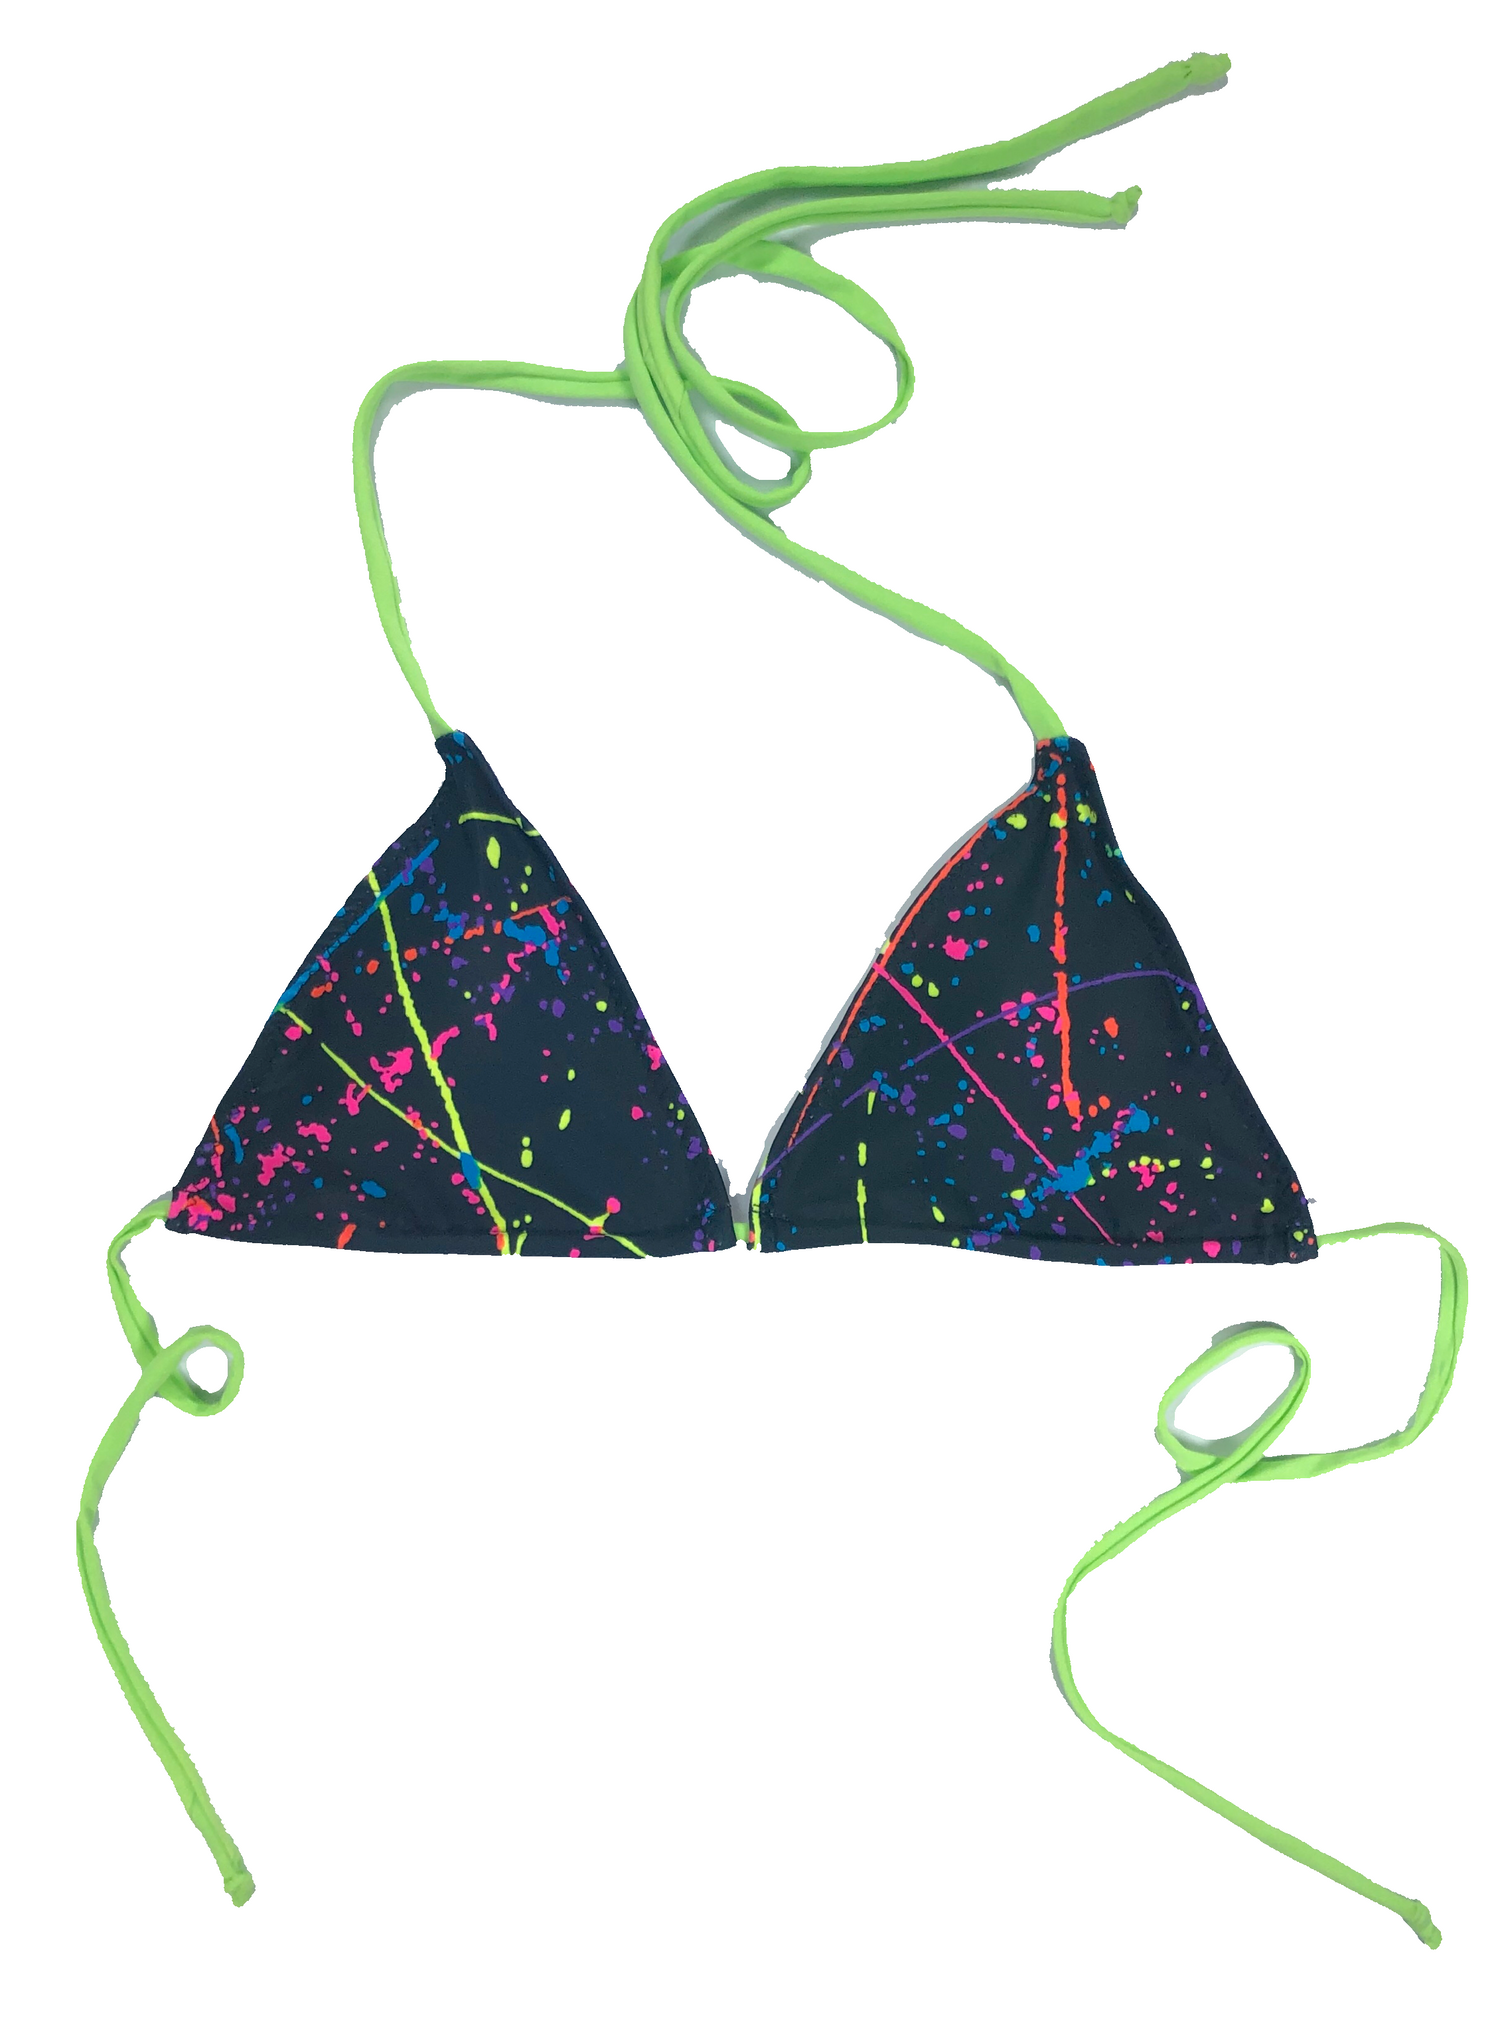 wendolin-designs - Wendolin Designs - Bikini Top - Triangular Bikini Top- Colorful splash fabric design